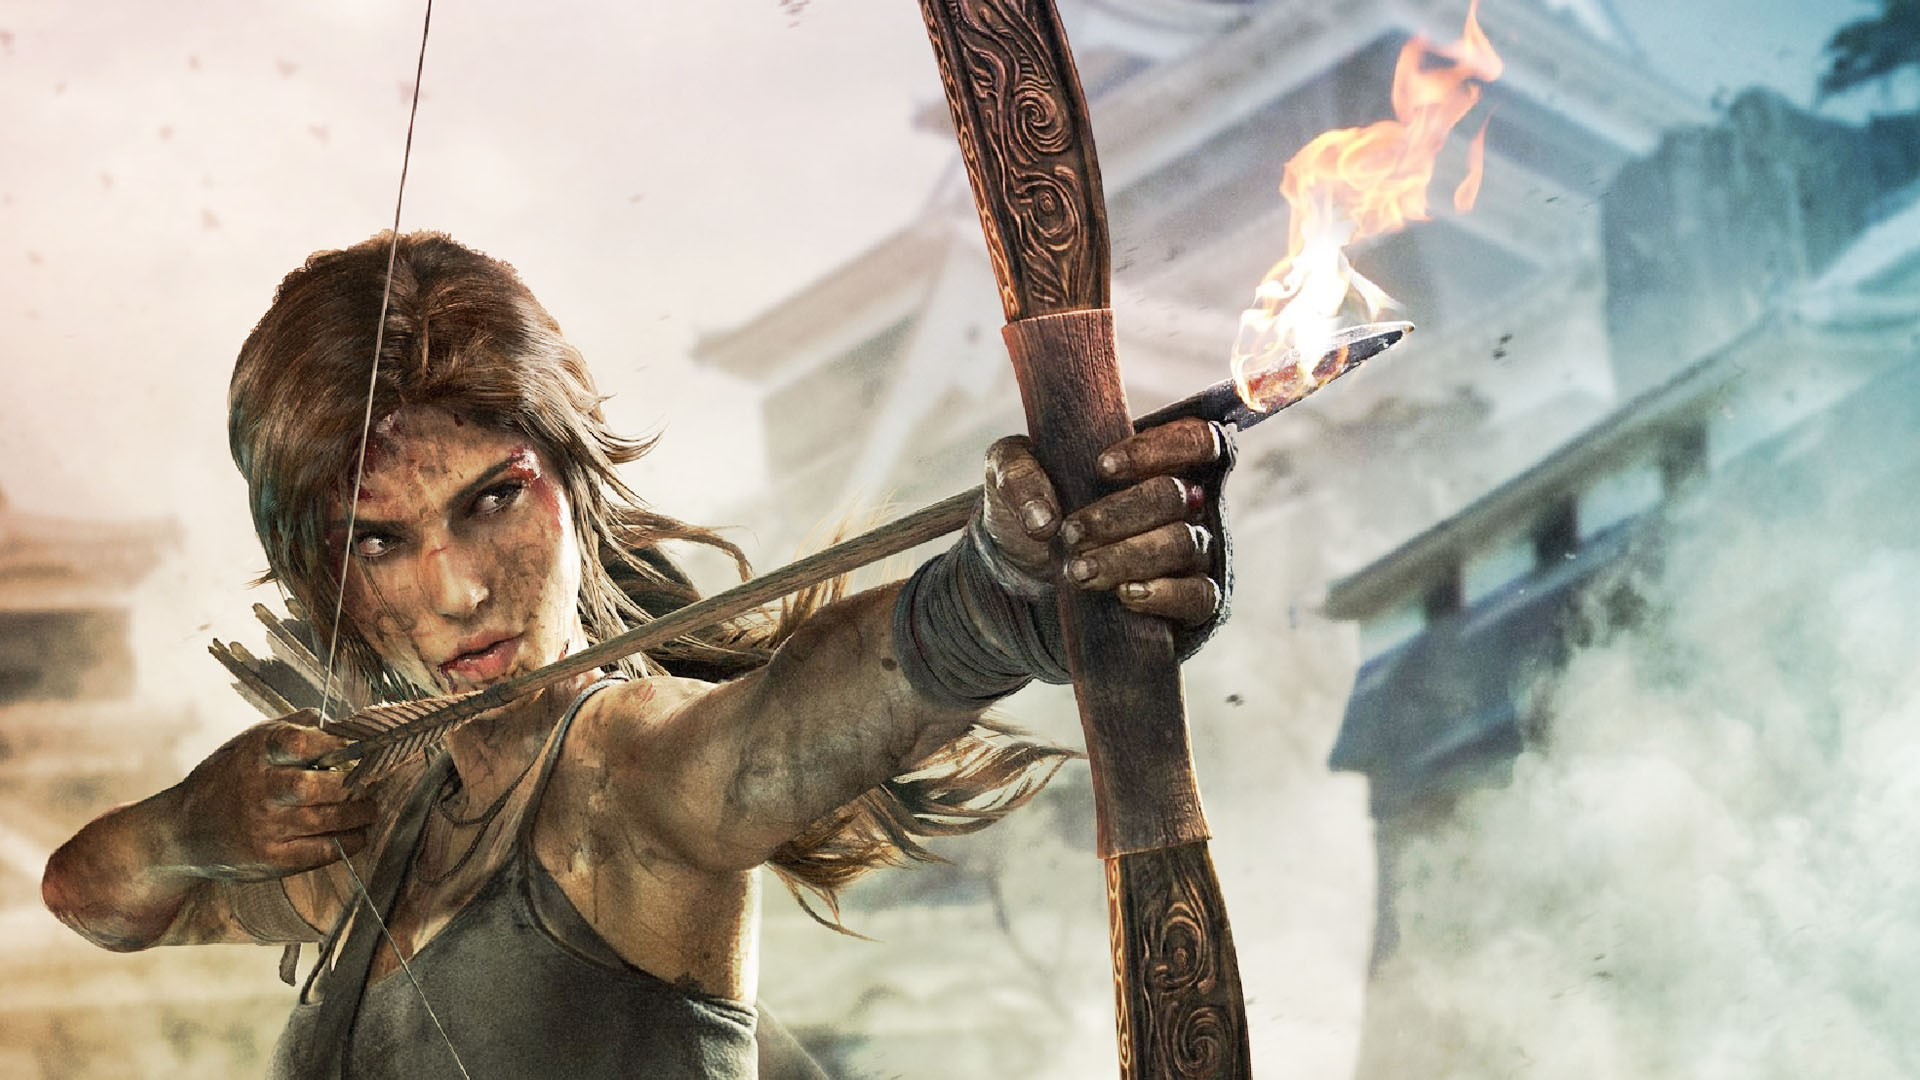 Lara Croft - Tomb Raider Netflix [commission] by ArtofFadoo on